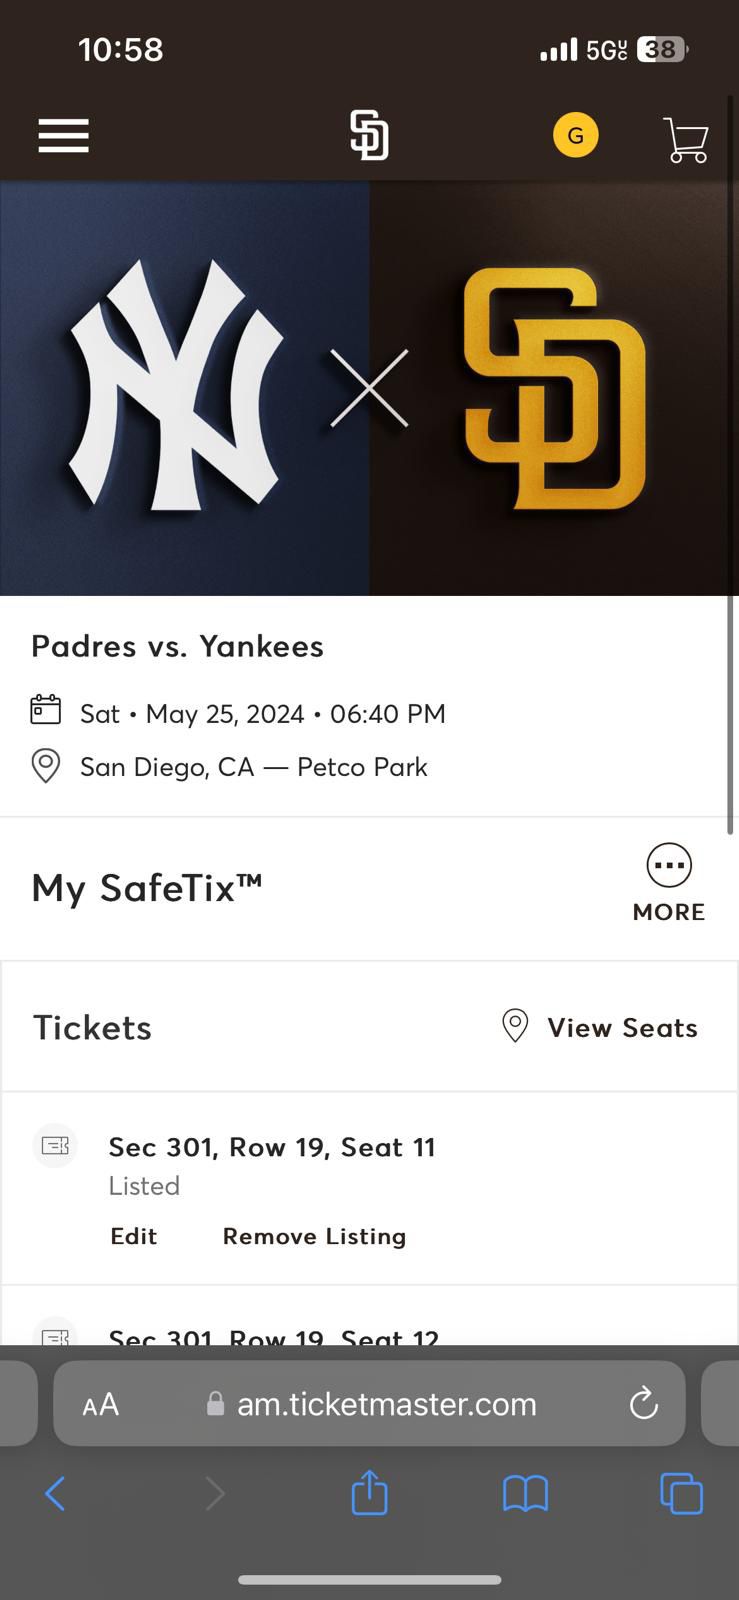 Padres Vs Yankees Saturday May 25th